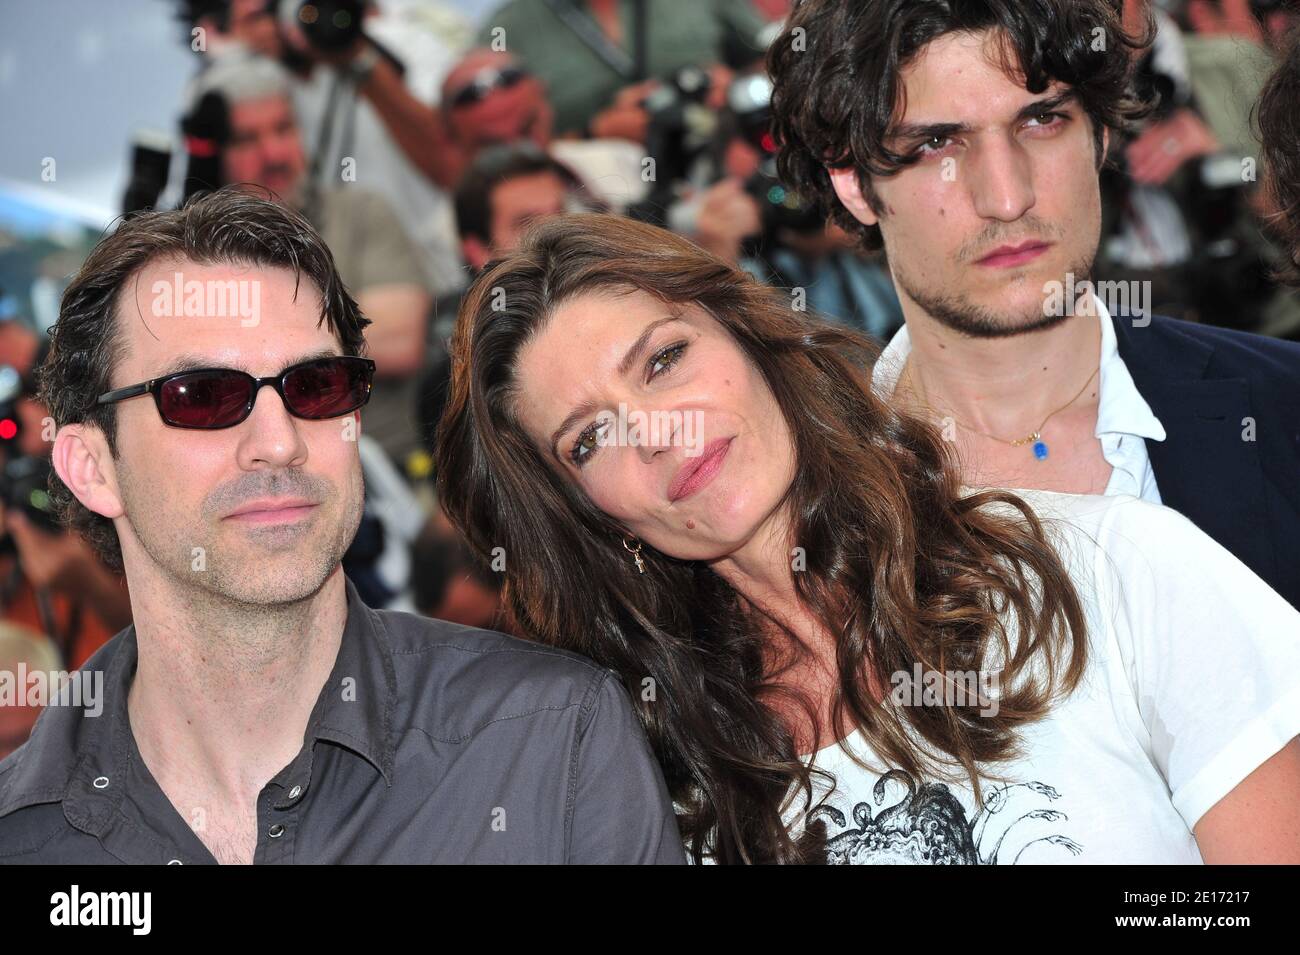 French actor Louis Garrel (R) and actress Chiara Mastroianni